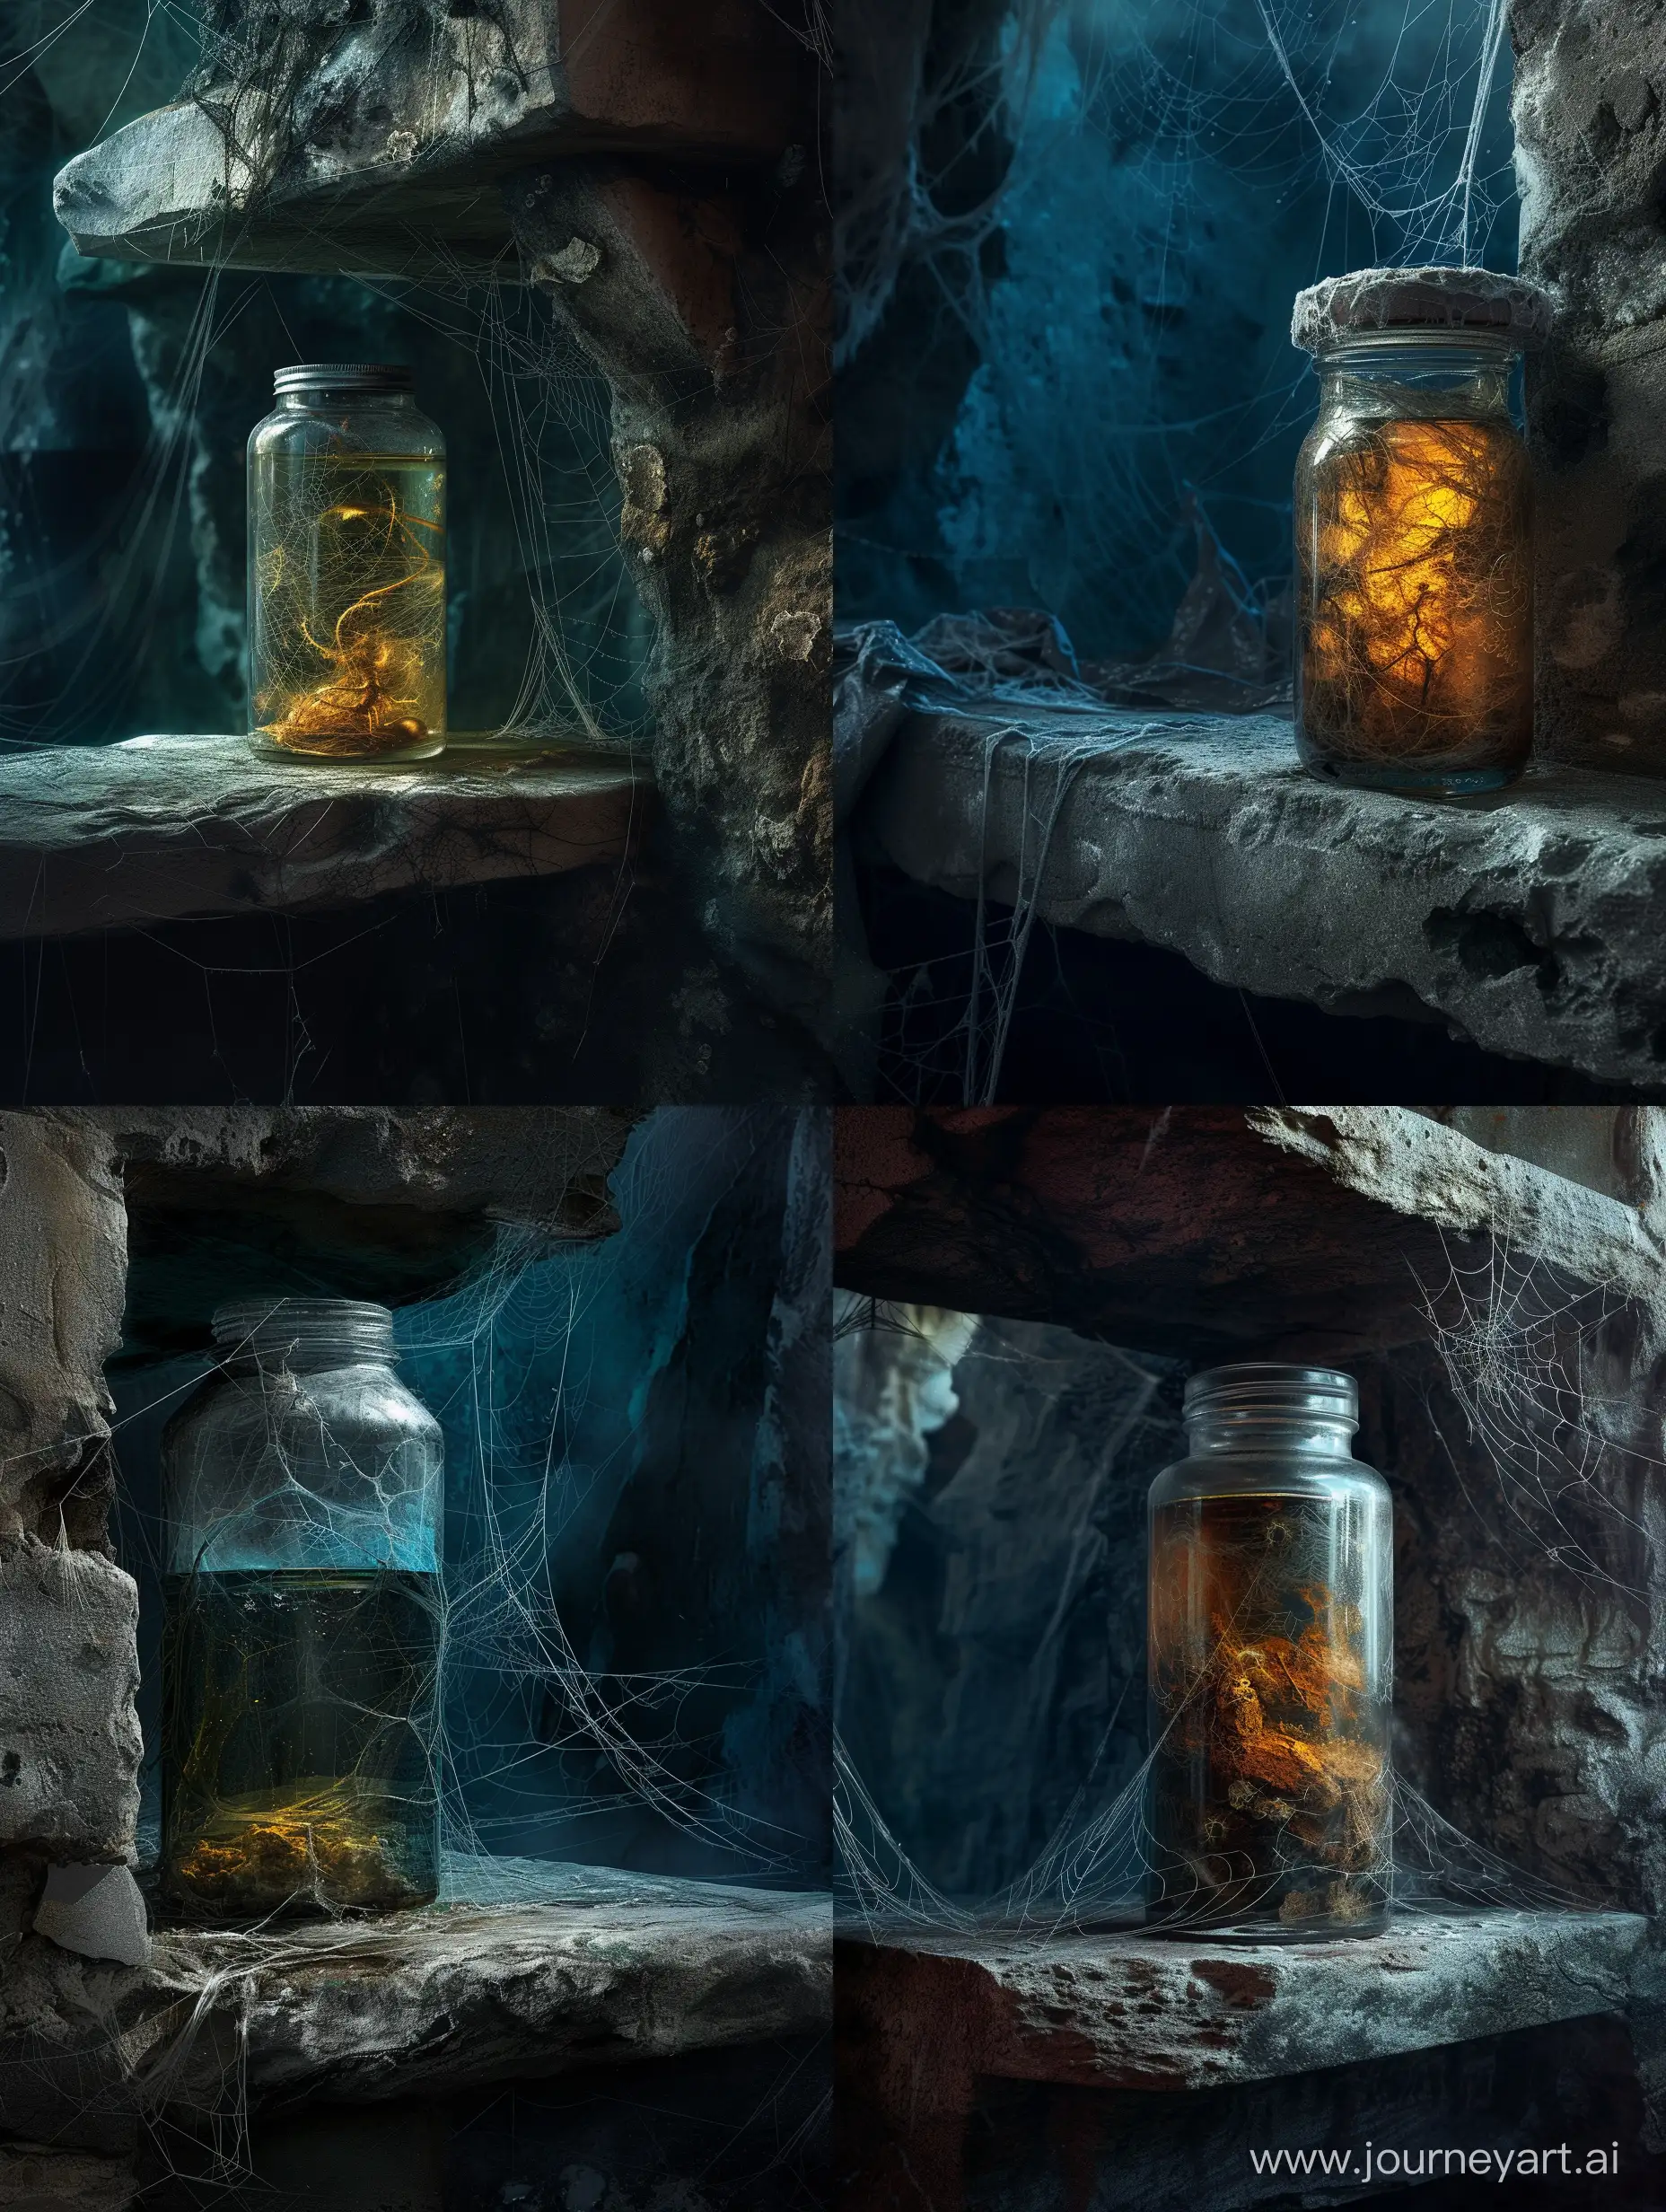 A dark World in alcohol inside a jar,on ancient stone shelf,cobwebs everywhere,incredible detail,terrifying,Digital Art.